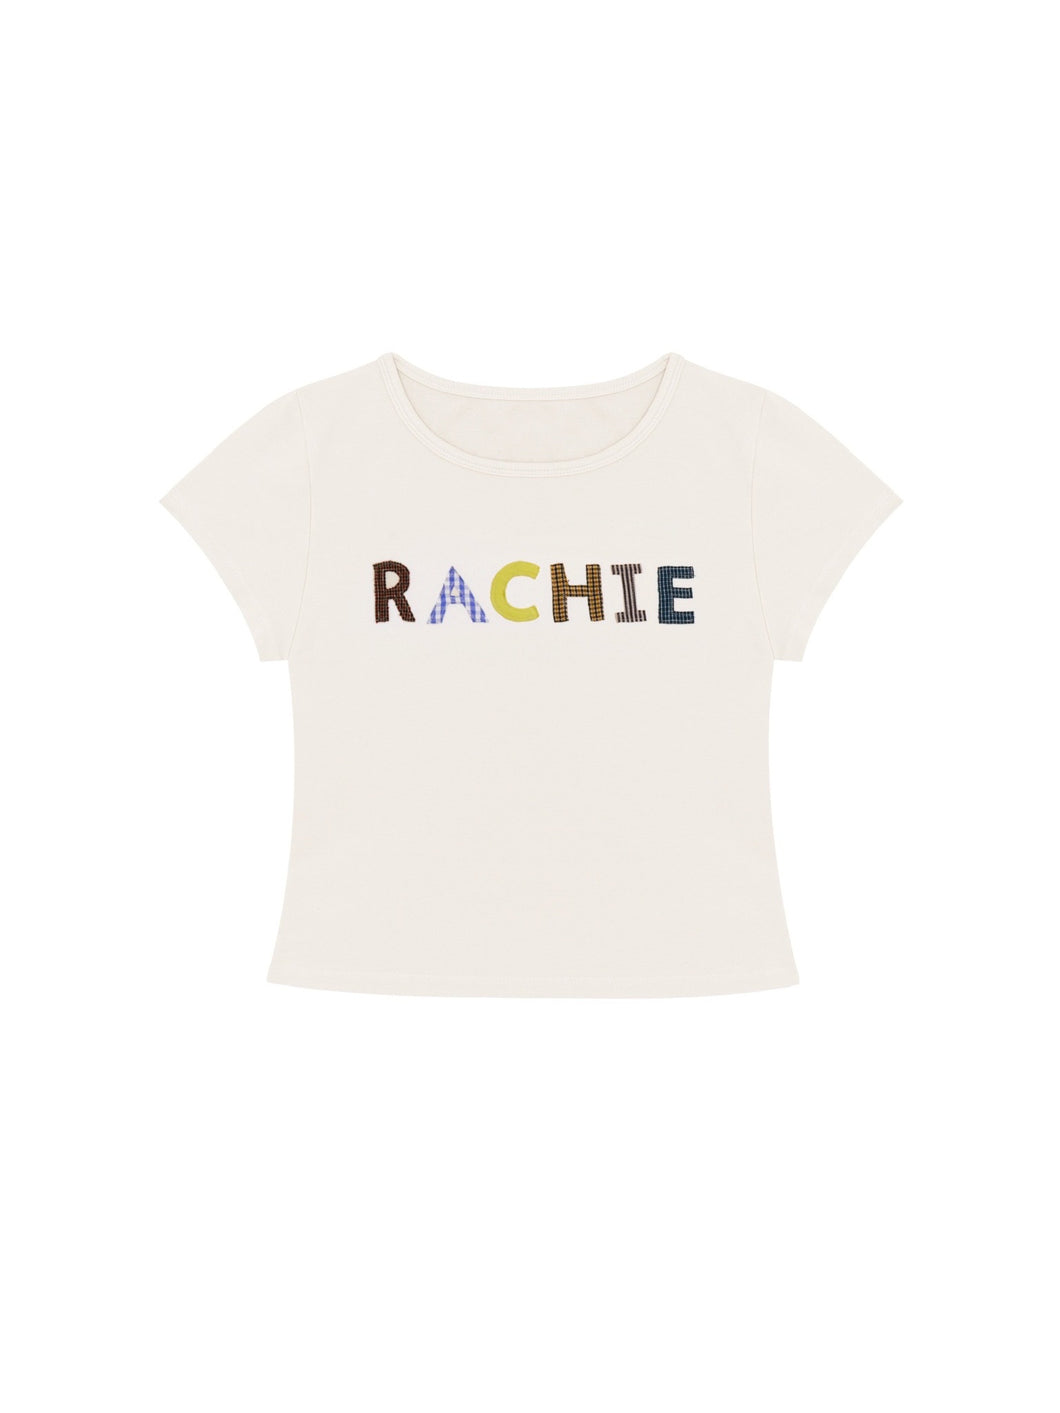 RACHIE Baby Tee